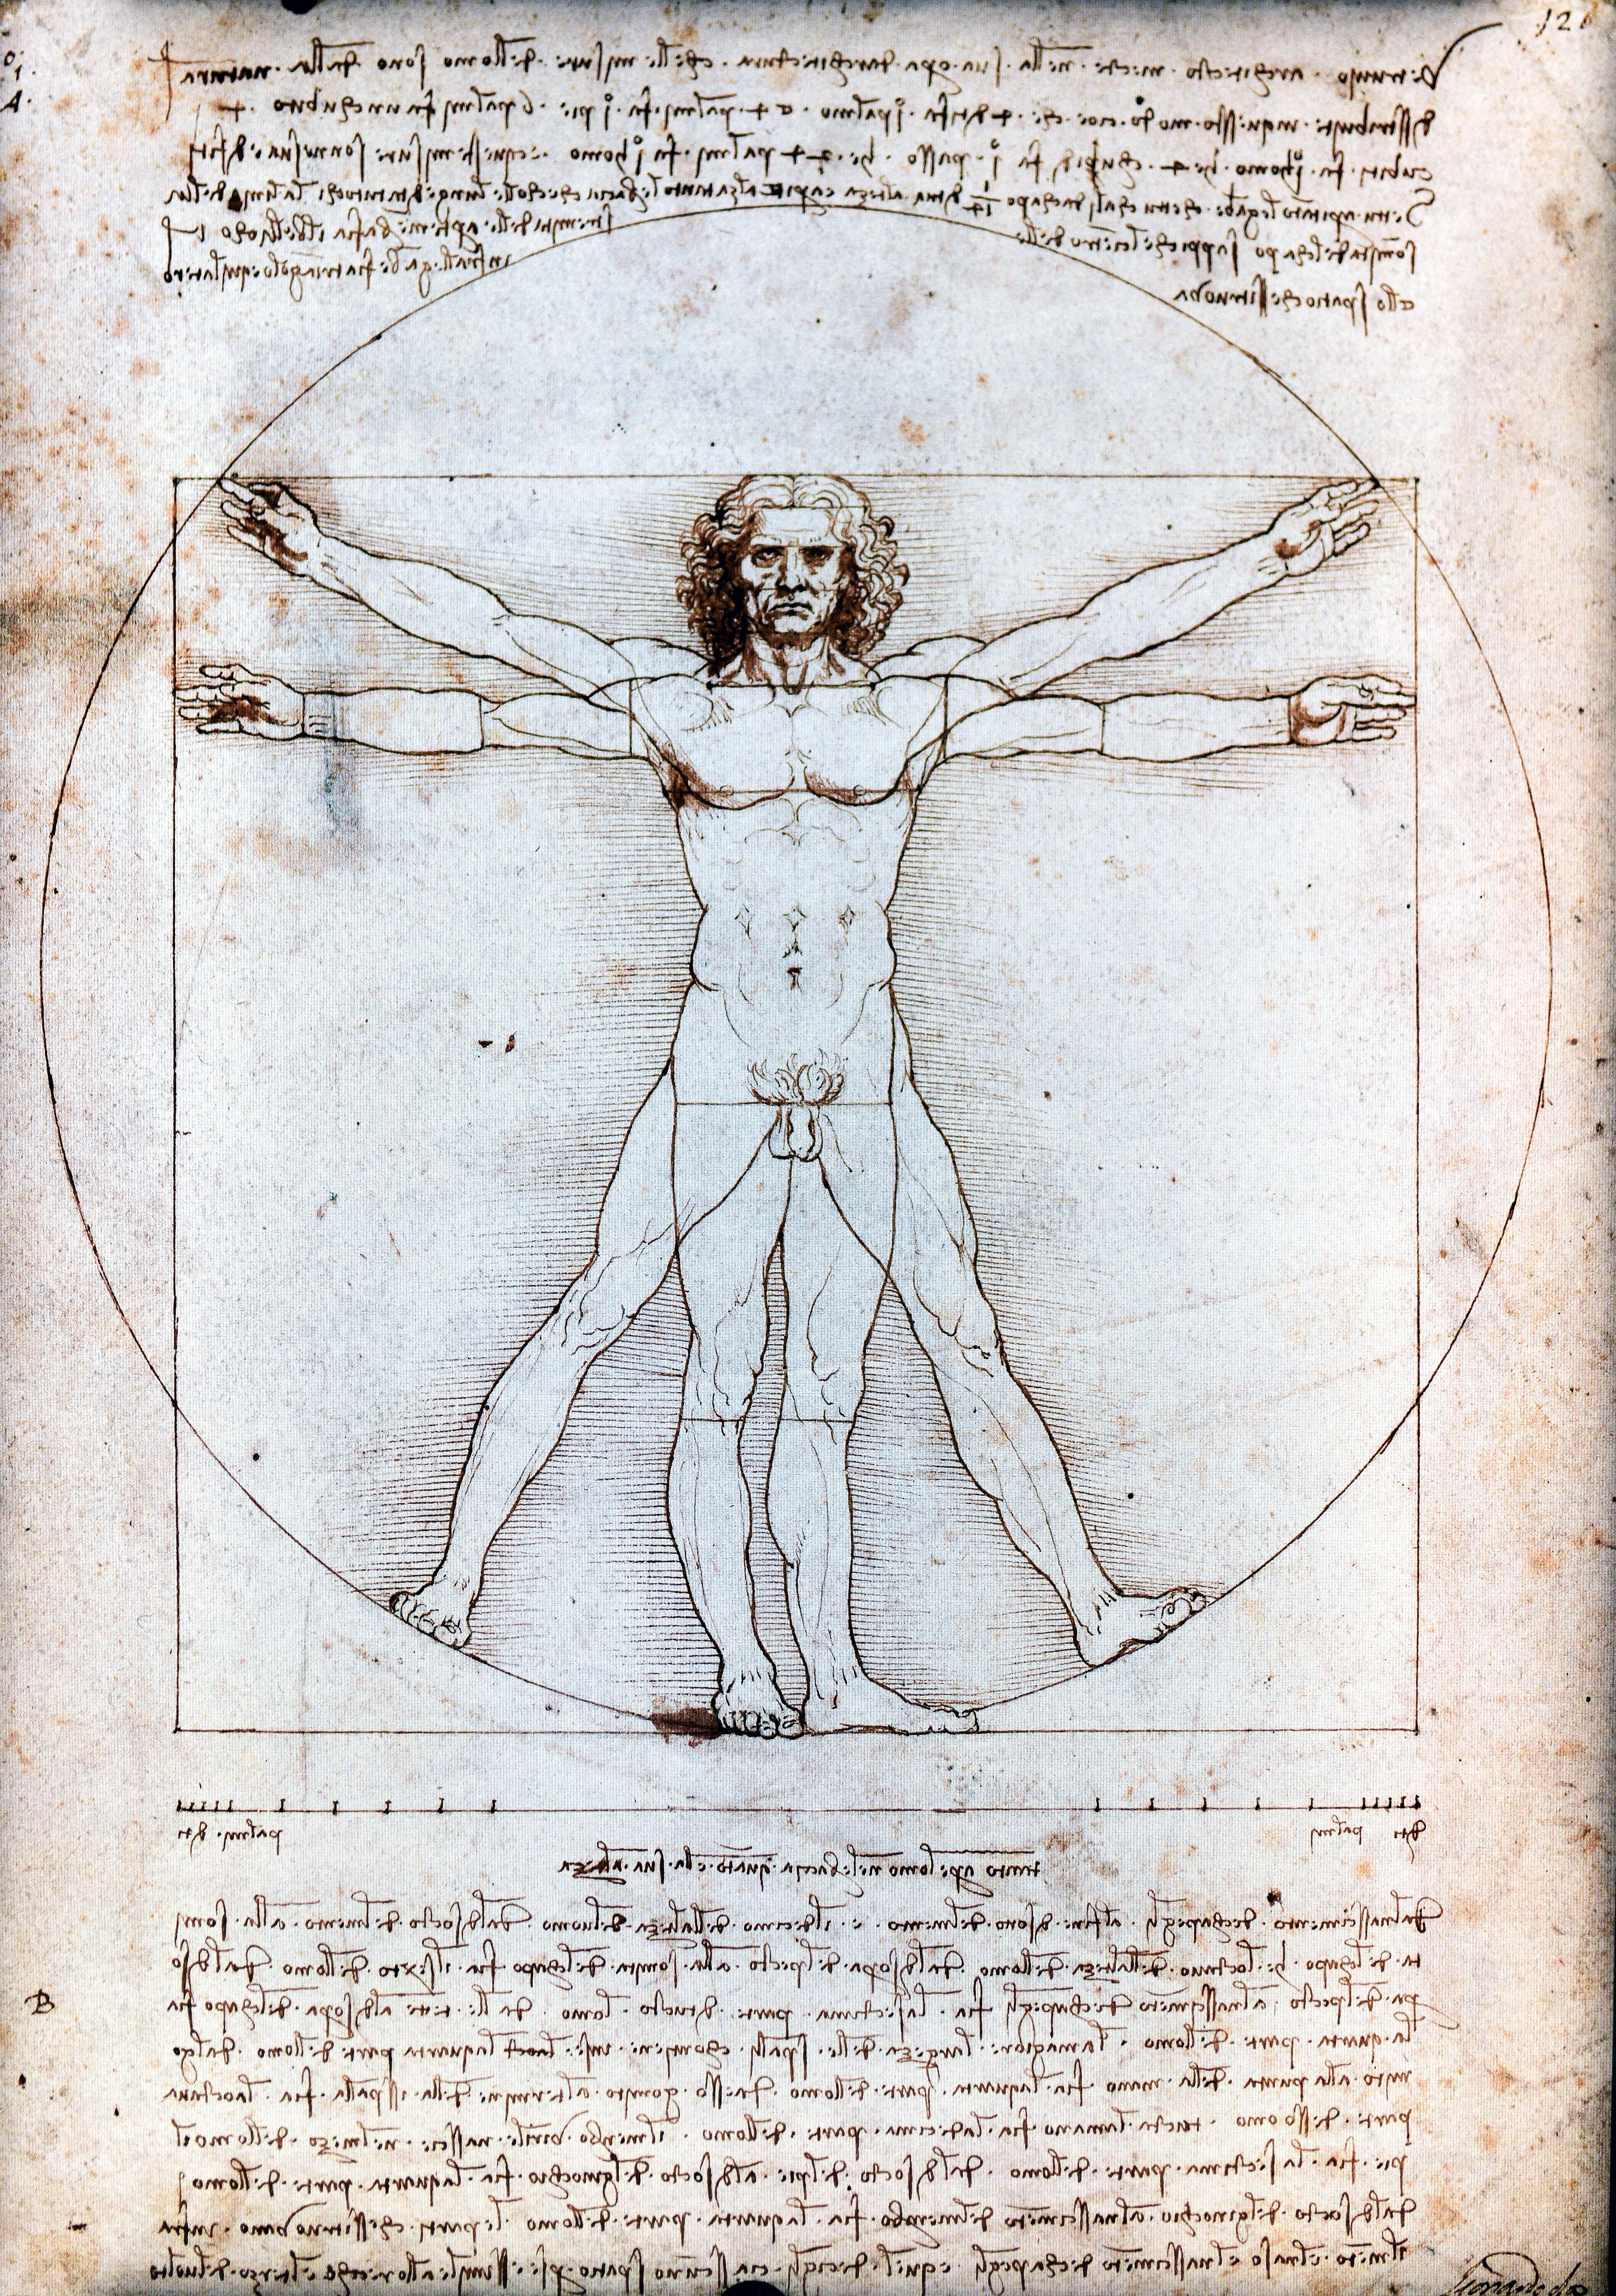 https://upload.wikimedia.org/wikipedia/commons/f/f1/Vitruvian_Man_by_Leonardo_da_Vinci.jpg